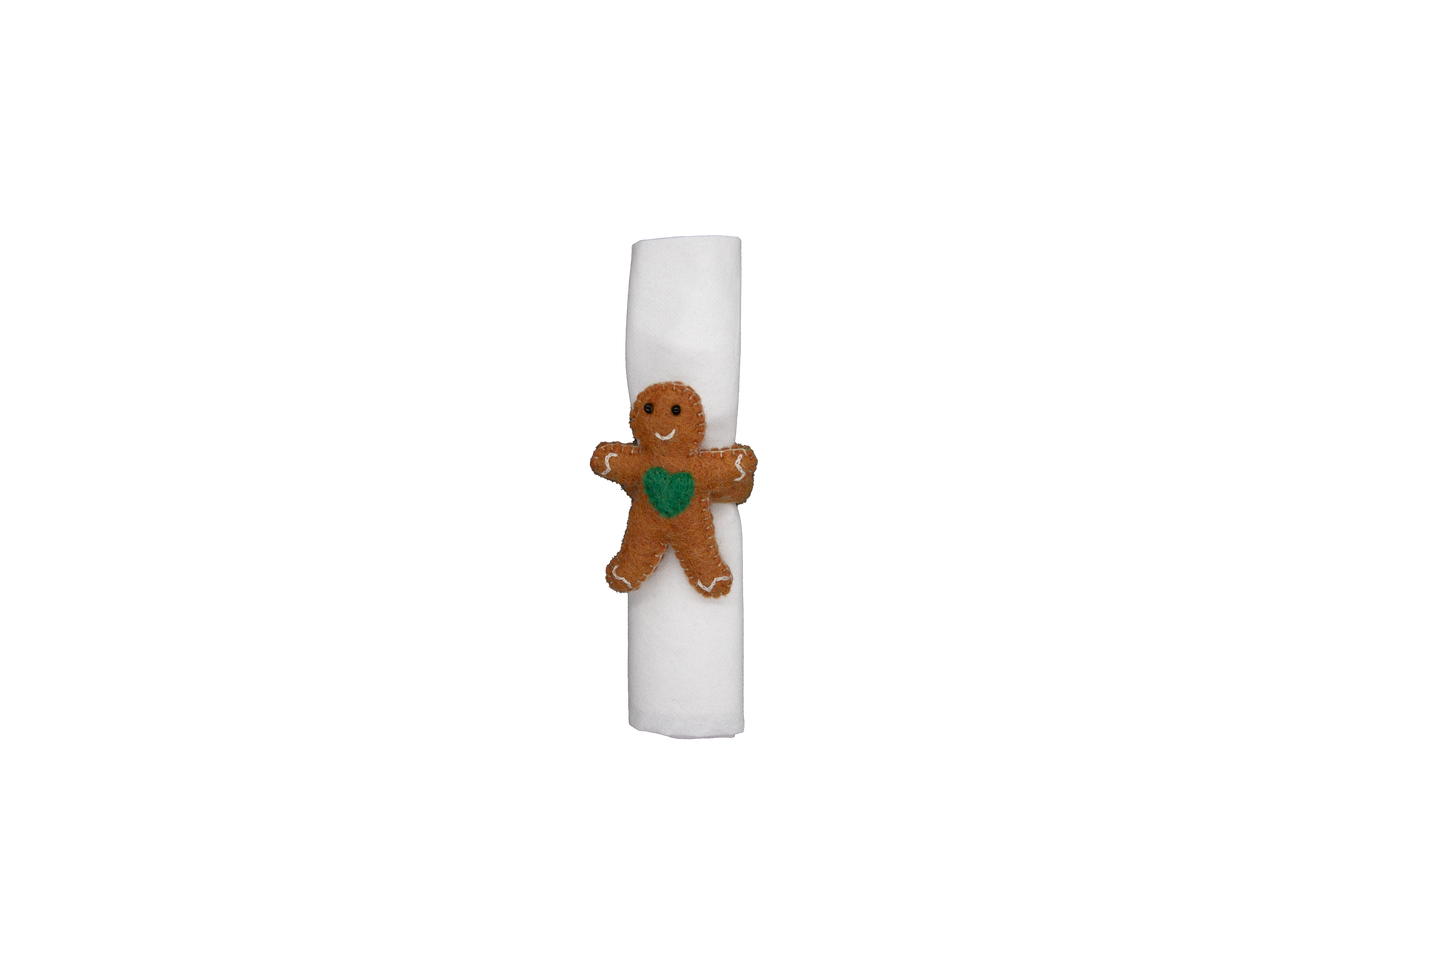 Gingerbread Friends Christmas Holiday Handmade Felt Napkin Rings--Set of 4